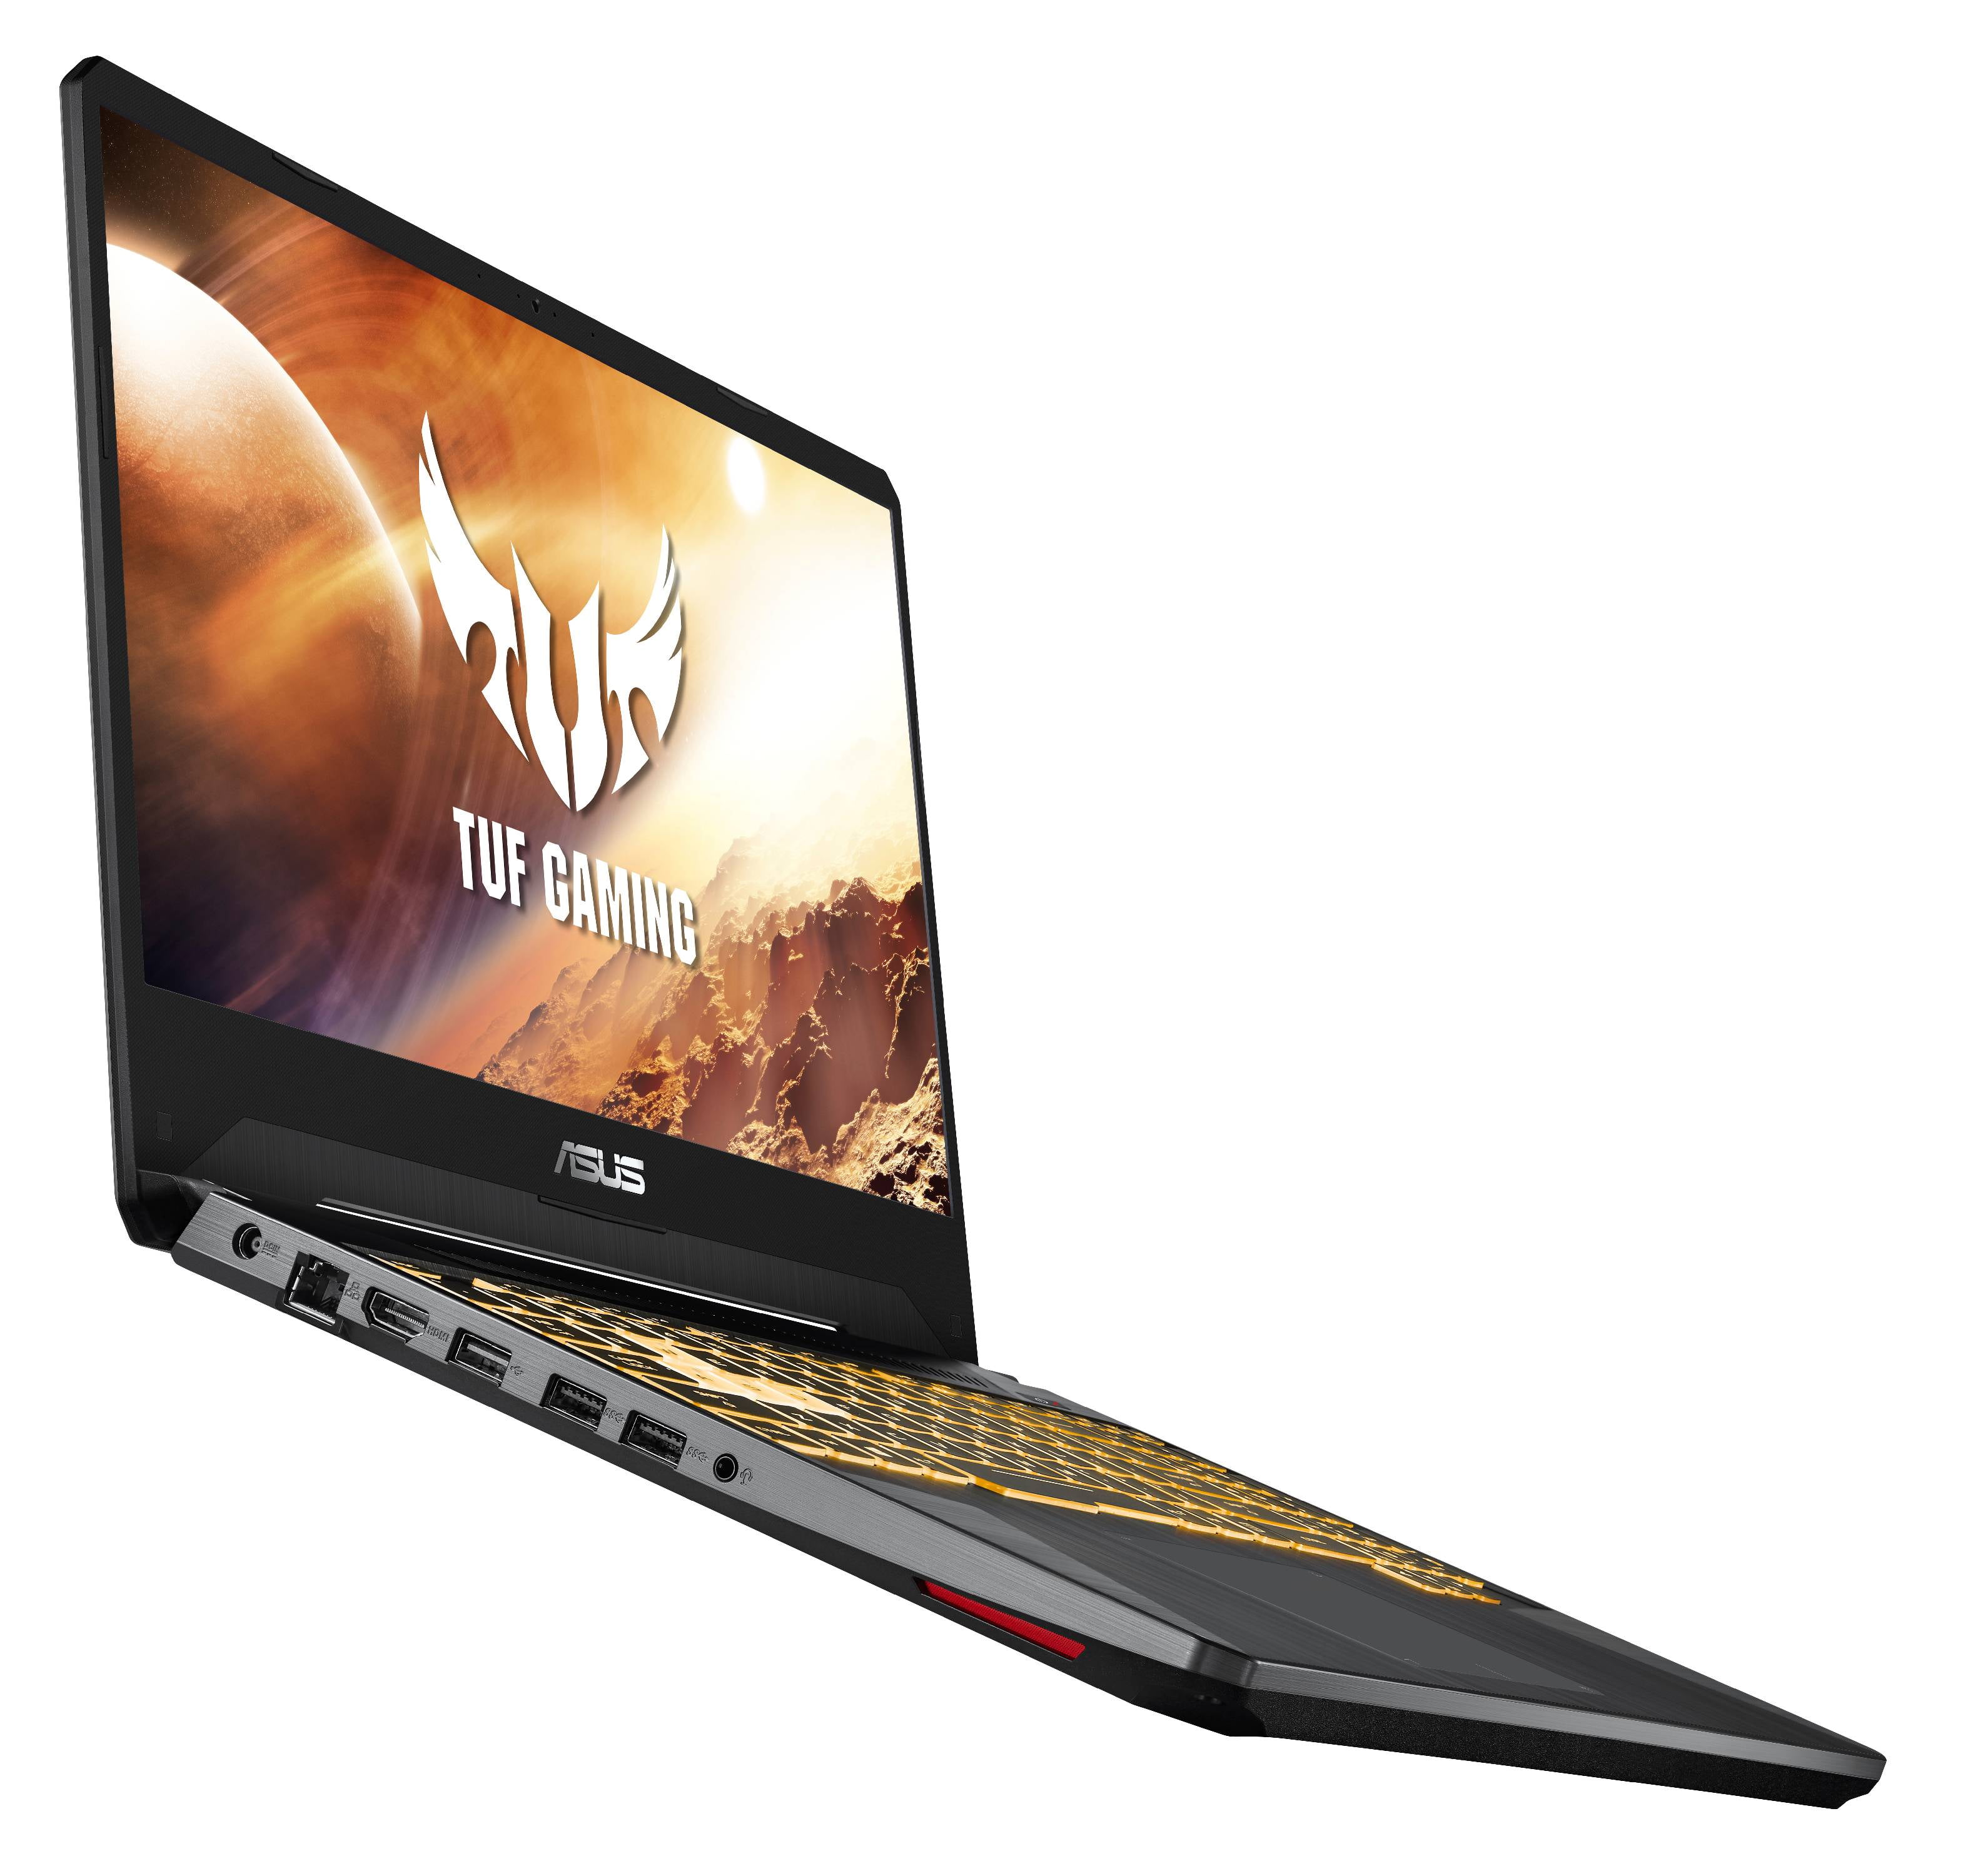 Asus Tuf 15 6 Full Hd Gaming Laptop Amd Ryzen 7 R7 3750h Geforce Gtx 1650 8gb Ddr4 256gb Pcie Ssd Windows 10 Home Black Fx505dt Wb72 Walmart Com Walmart Com